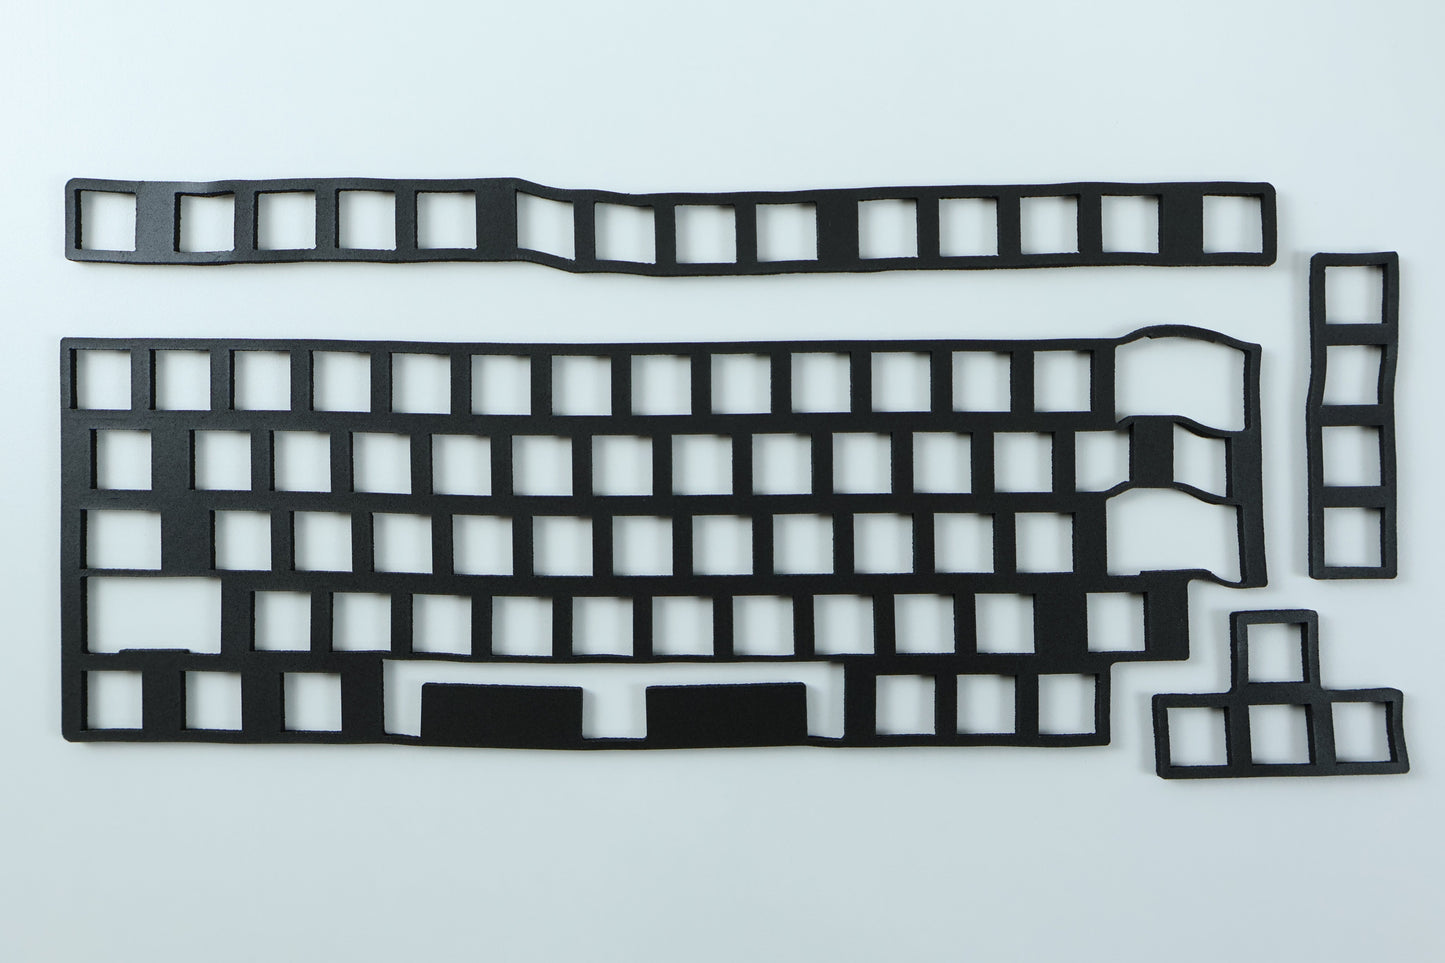 Keyboard PCB Poron Foam Gasket